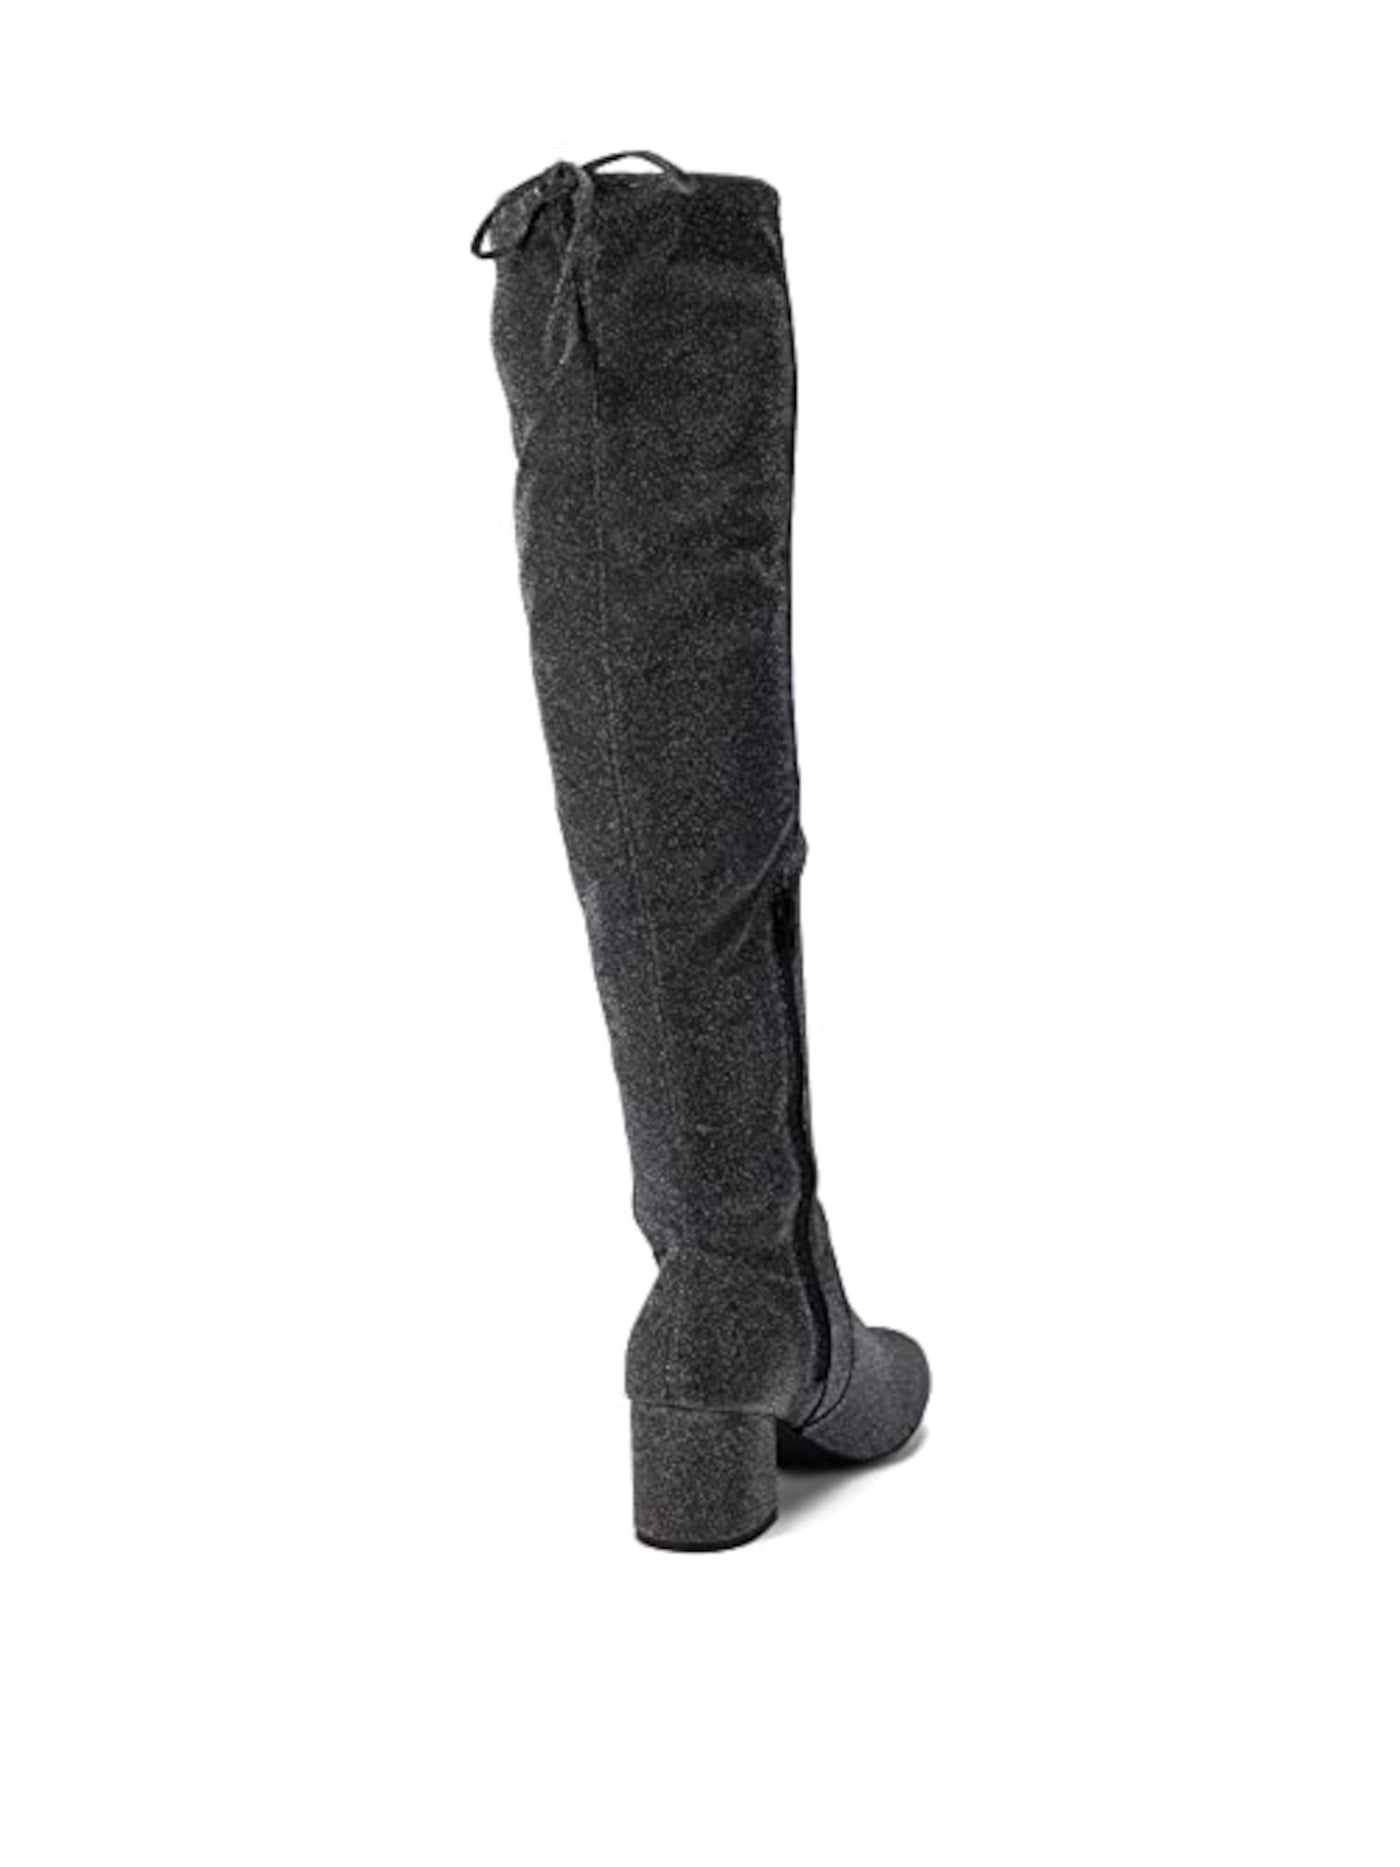 SUGAR Womens Black Silver Cushioned Glitter Ollie Almond Toe Block Heel Dress Boots Shoes 6.5 M